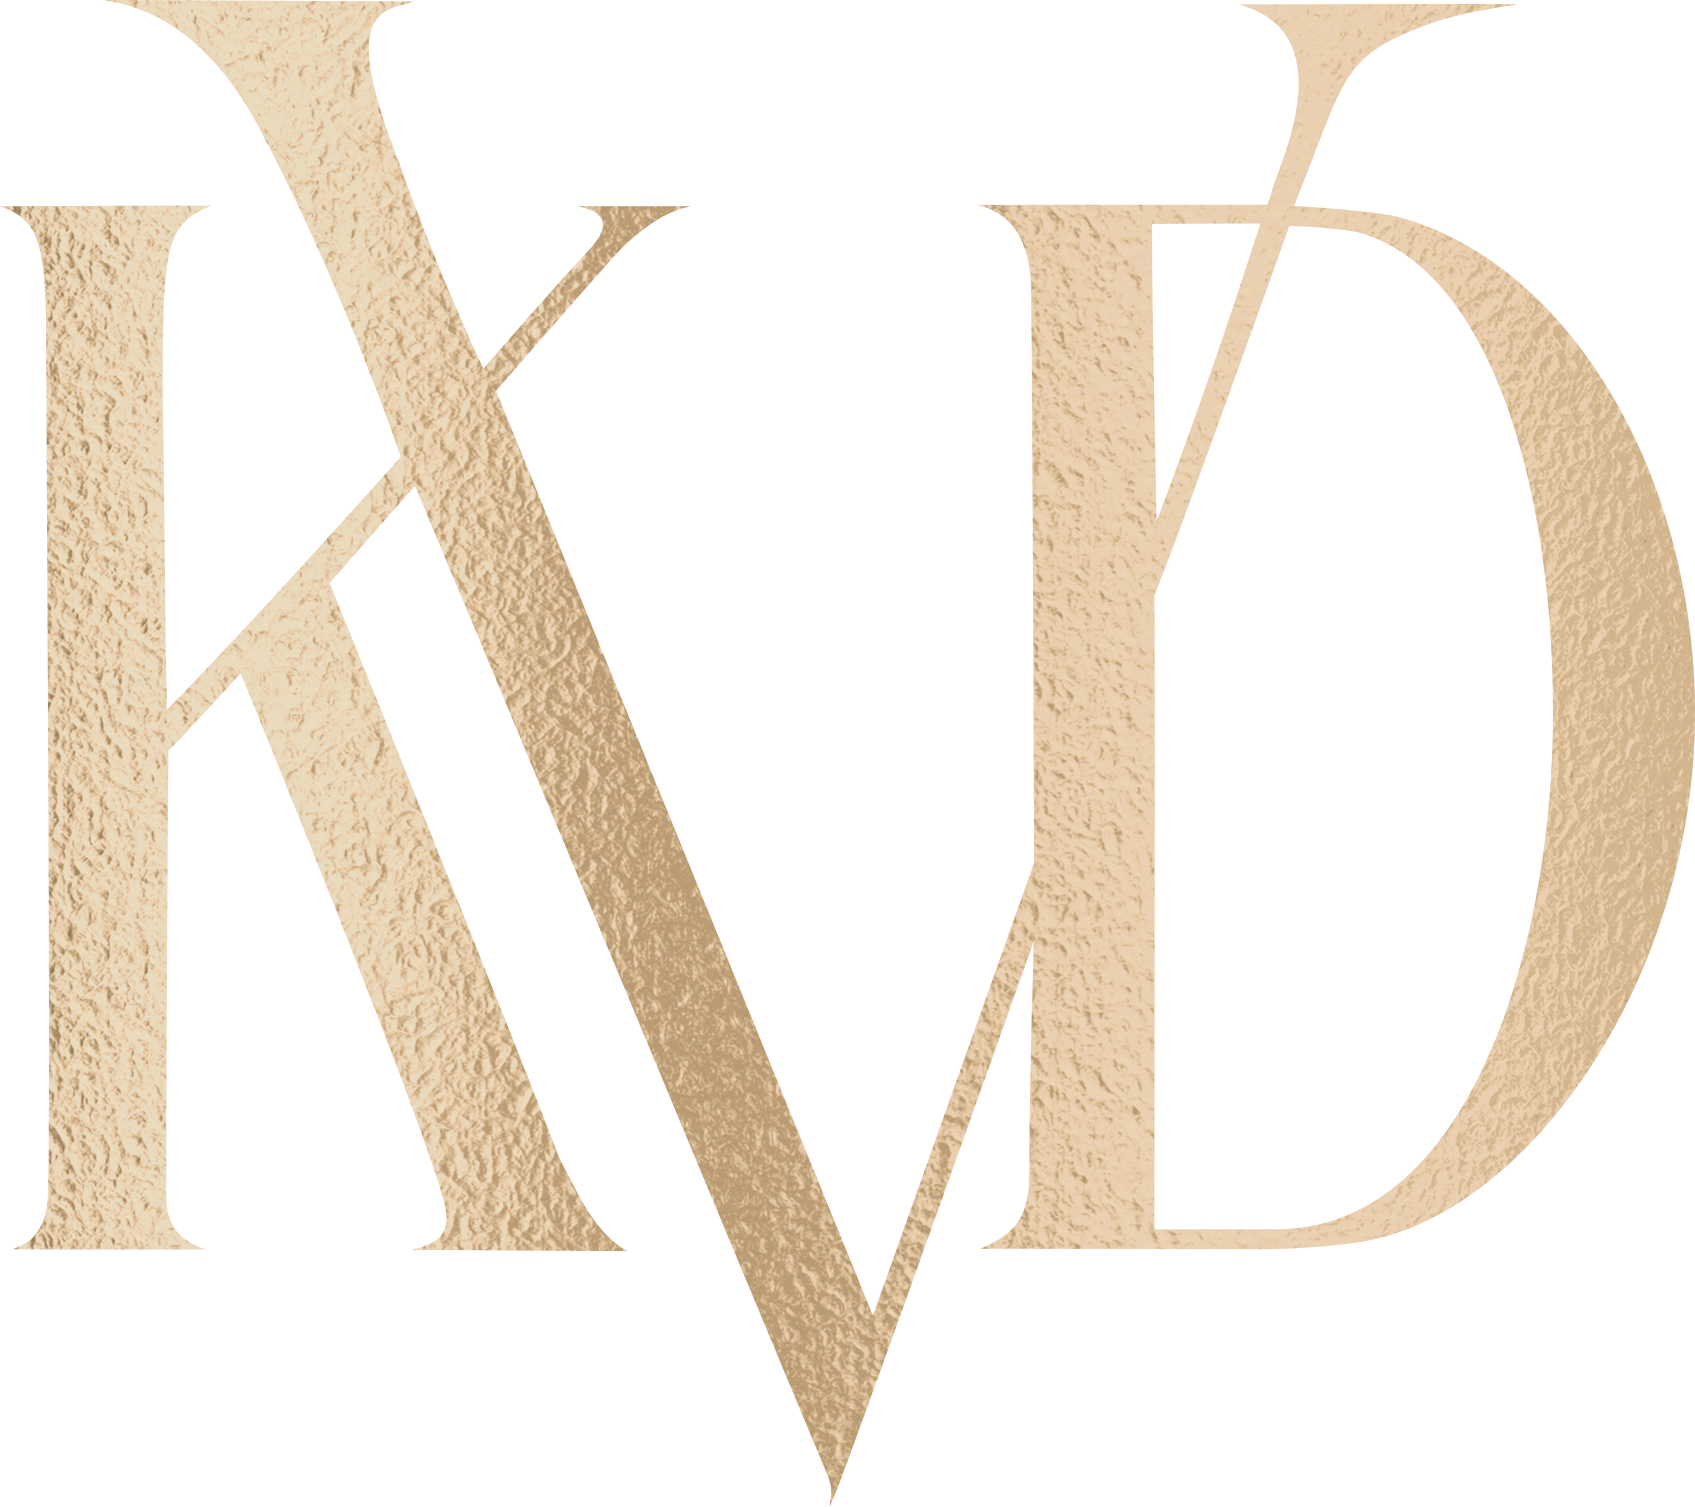 KVD Vegan Beauty discount codes